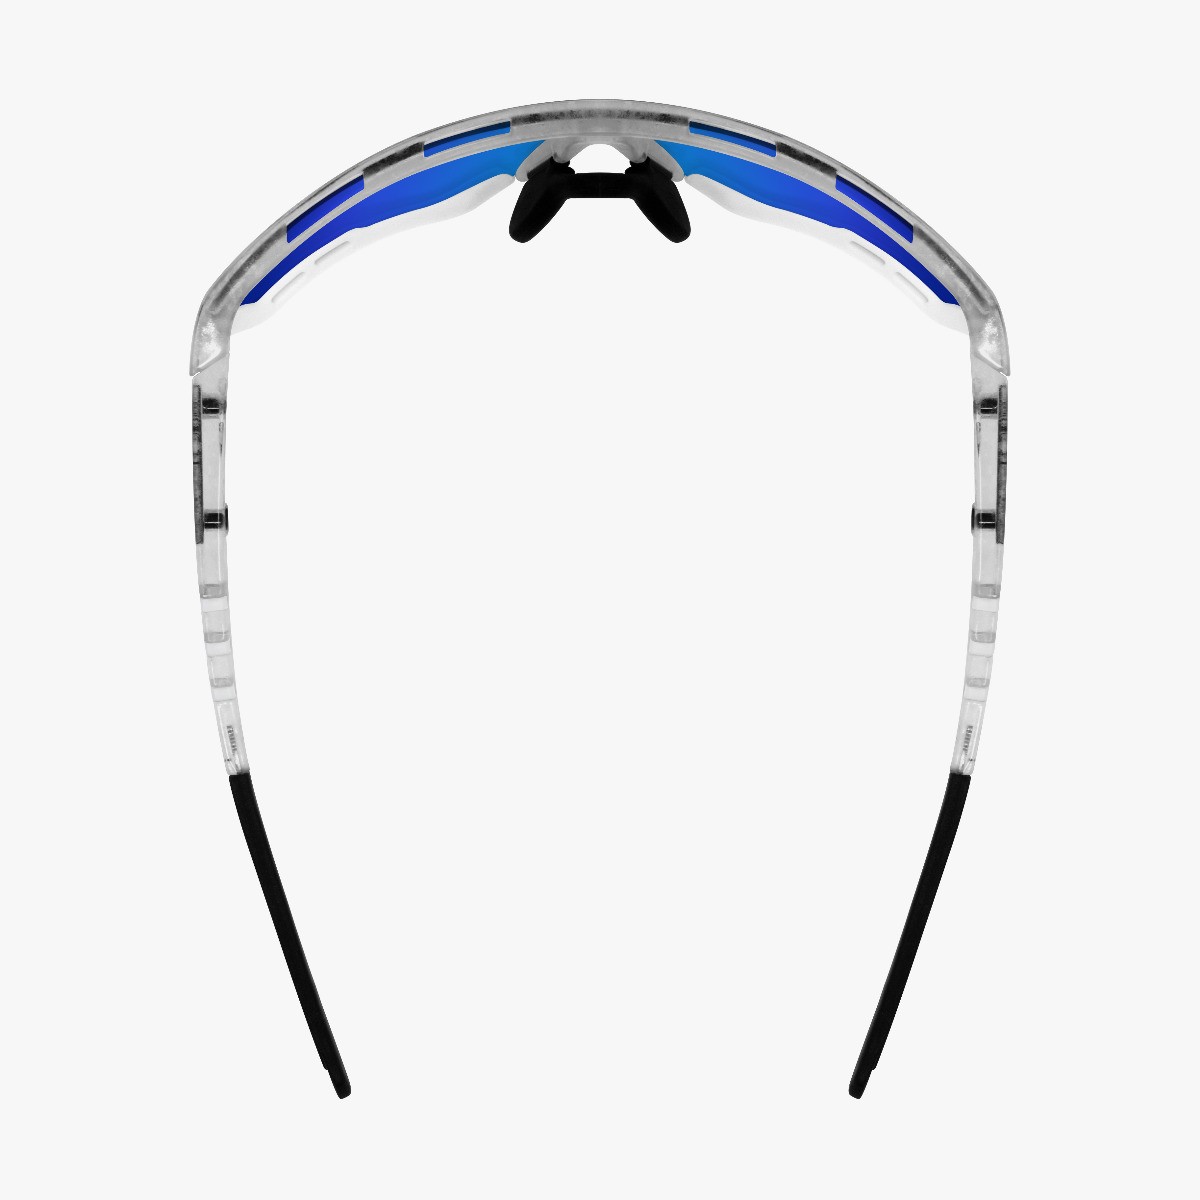 Aerocomfort cycling sunglasses scnxt photochromic frozen frame blue lenses EY19130502
